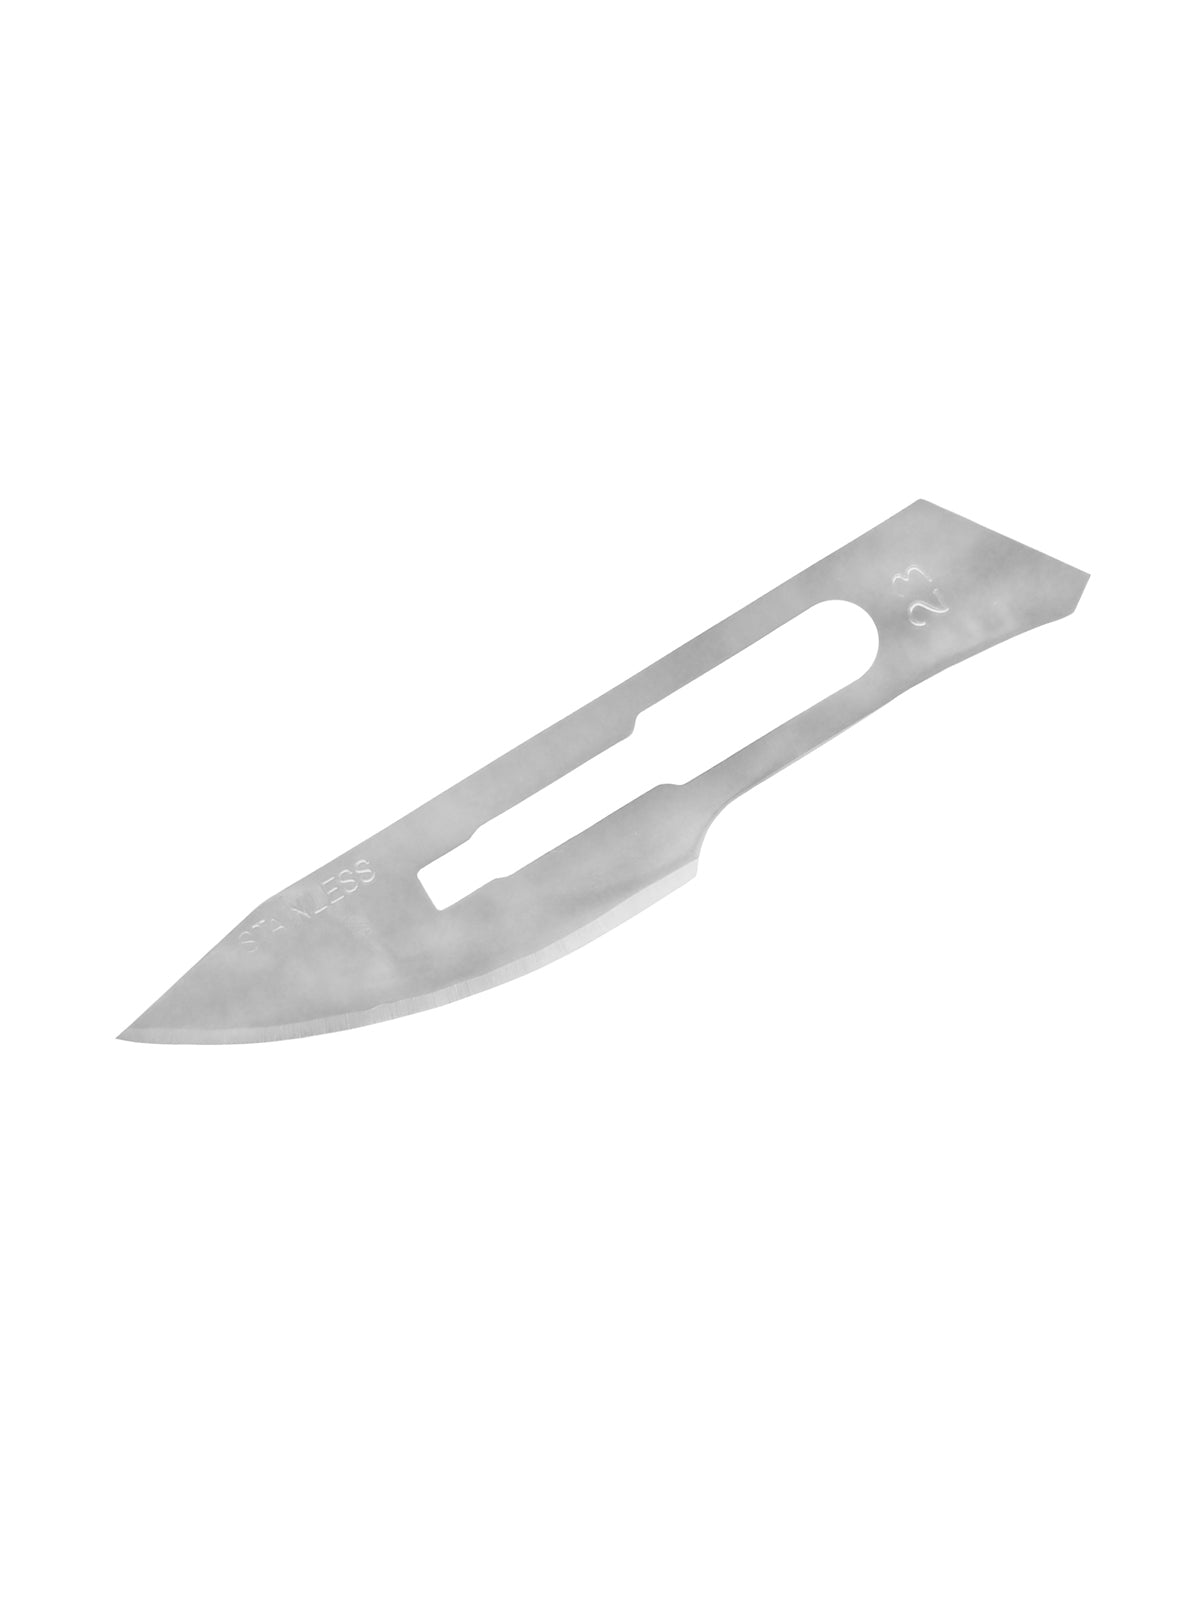 Stainless Steel Scalpel Blade - 27823 - Standard